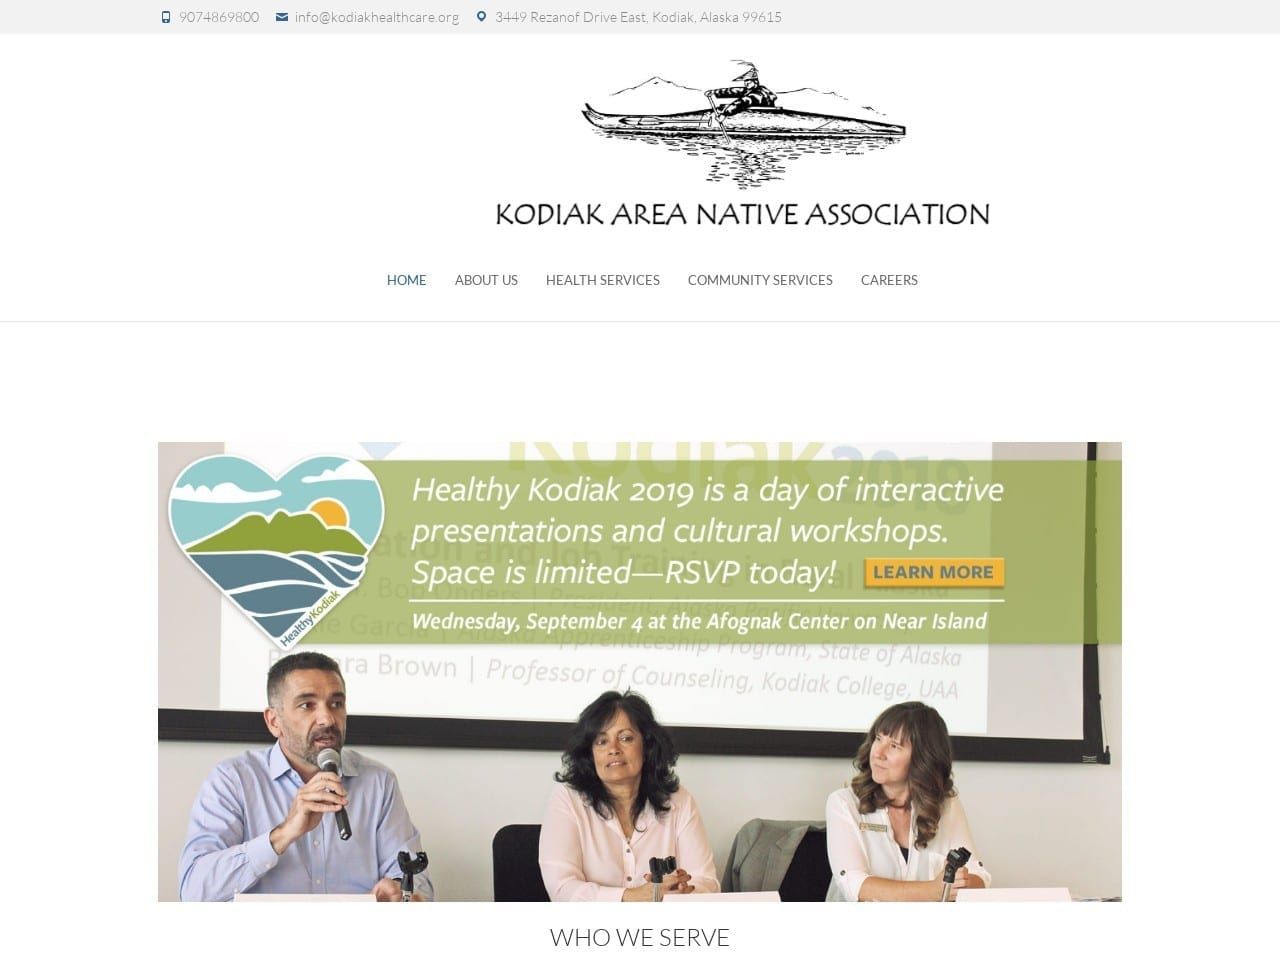 Kodiak Area Native Association Website Screenshot from kanaweb.org